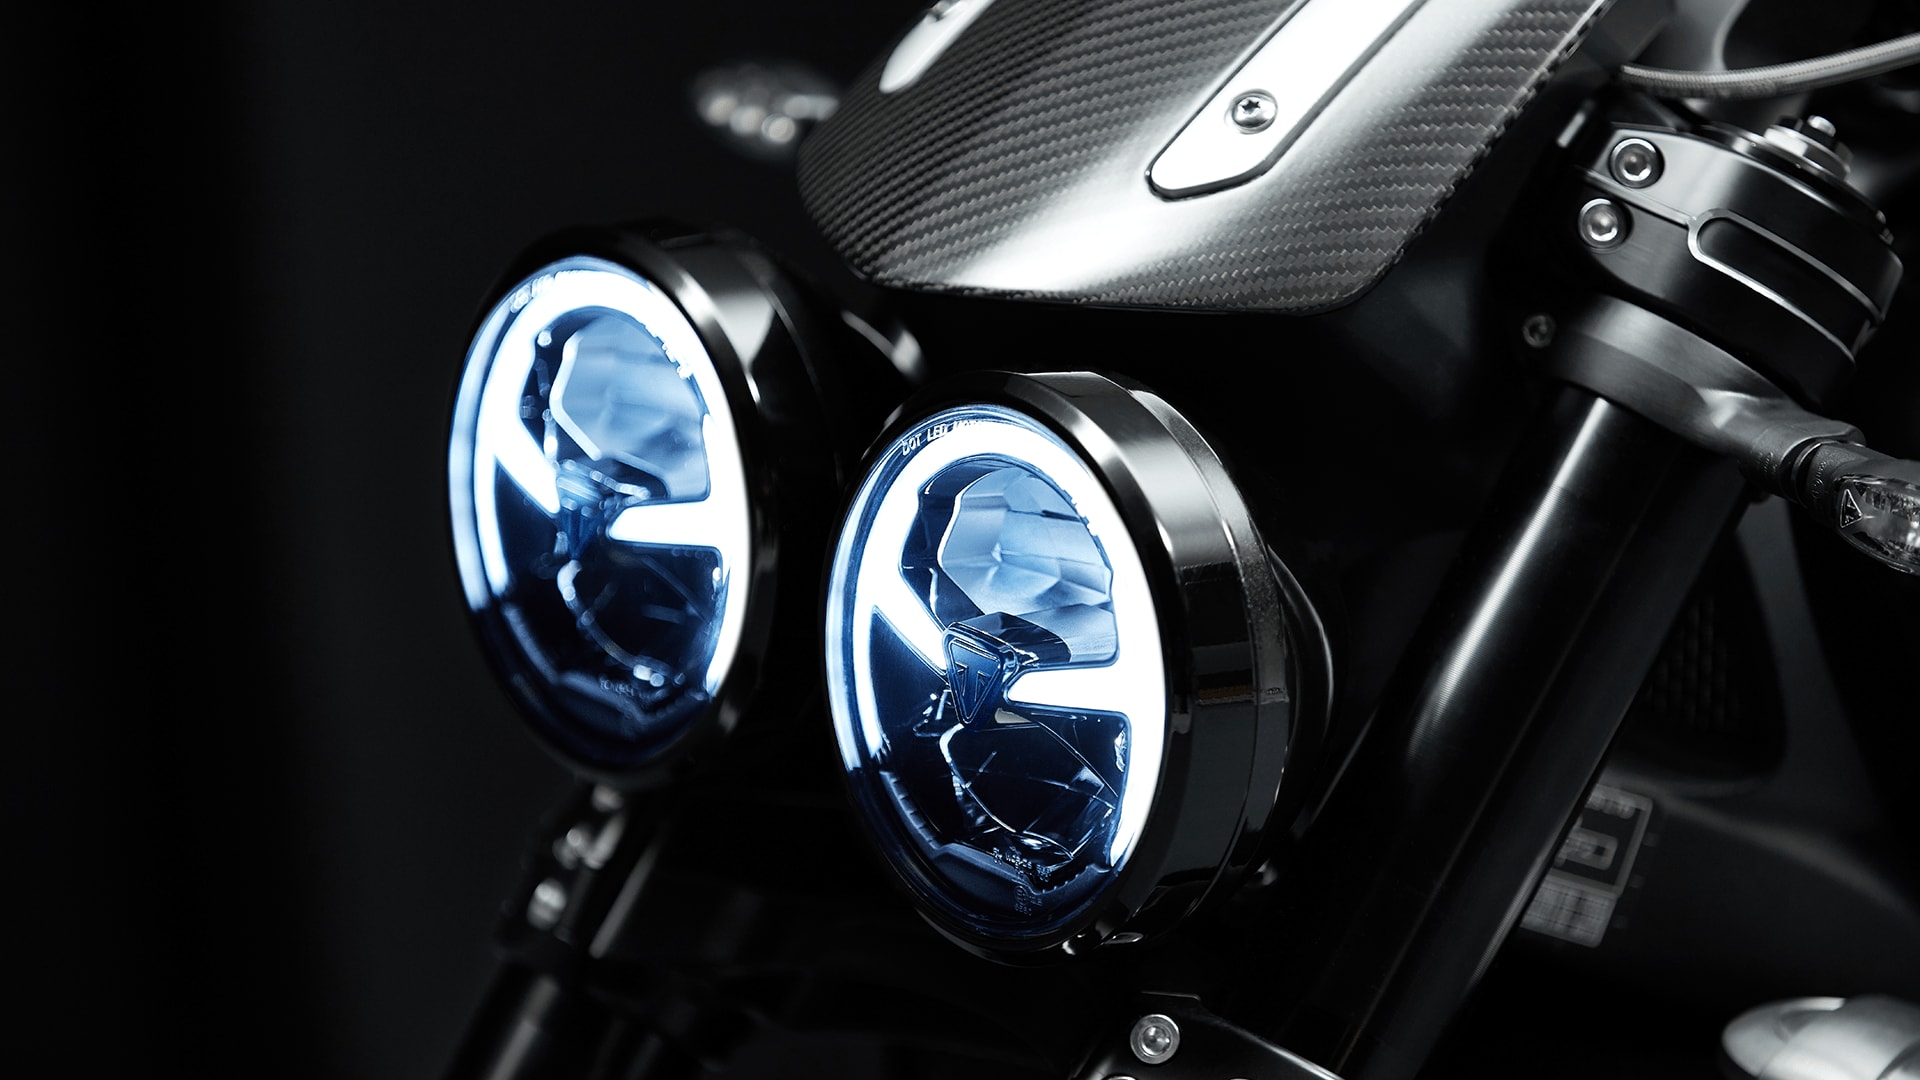 Triumph Rocket TFC Concept with illuminated headlights